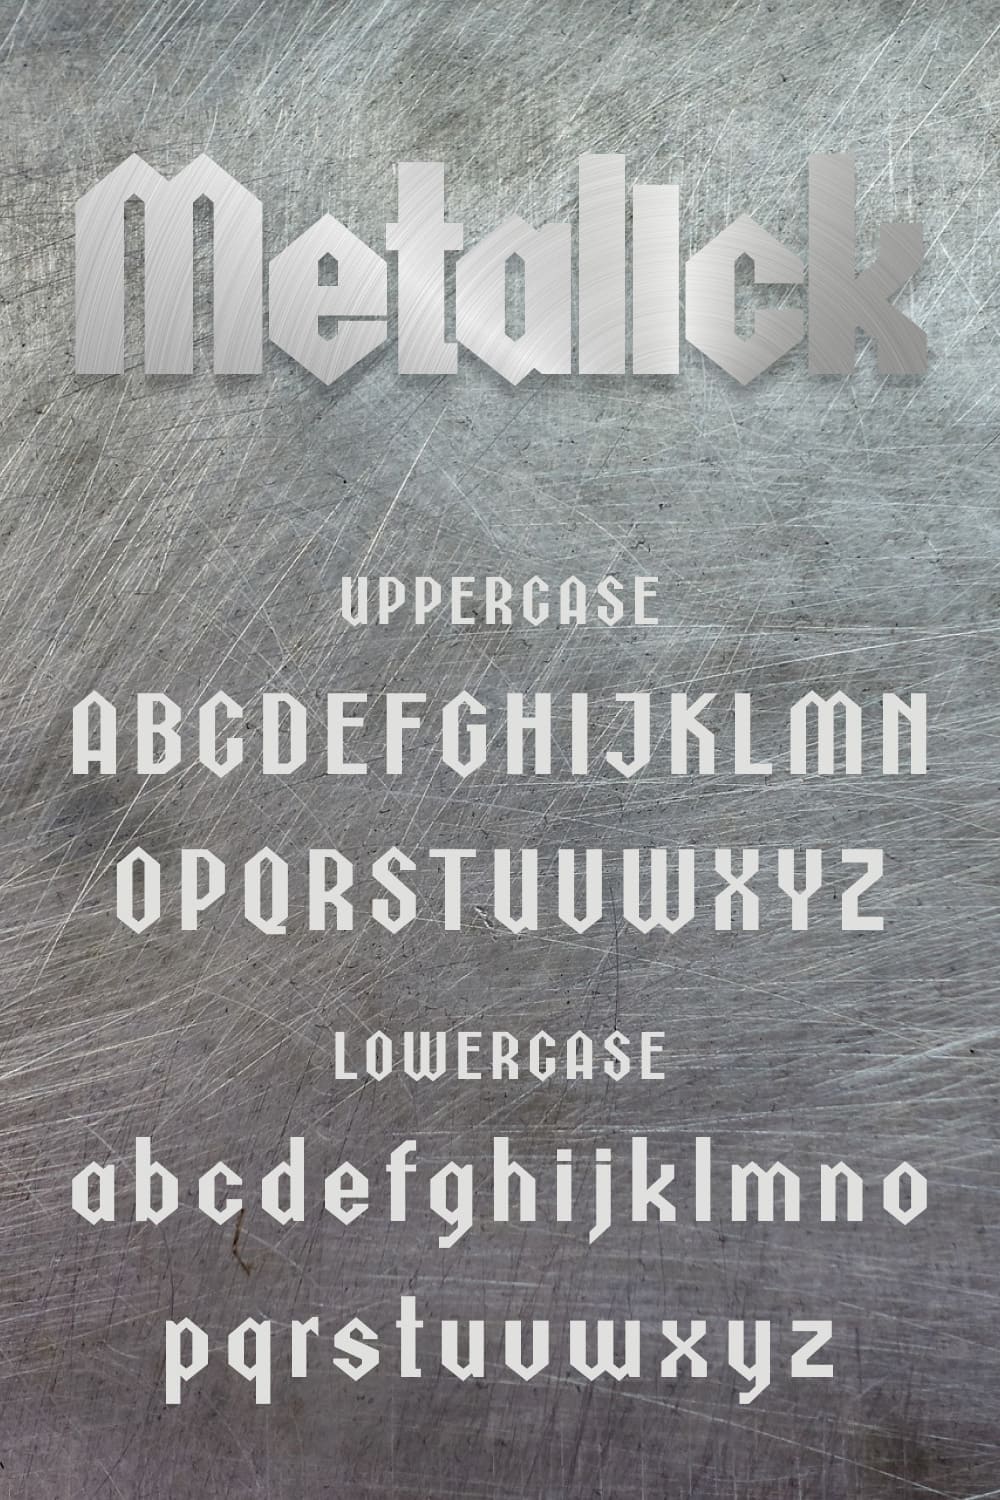 Free metalic font - Pinterest.